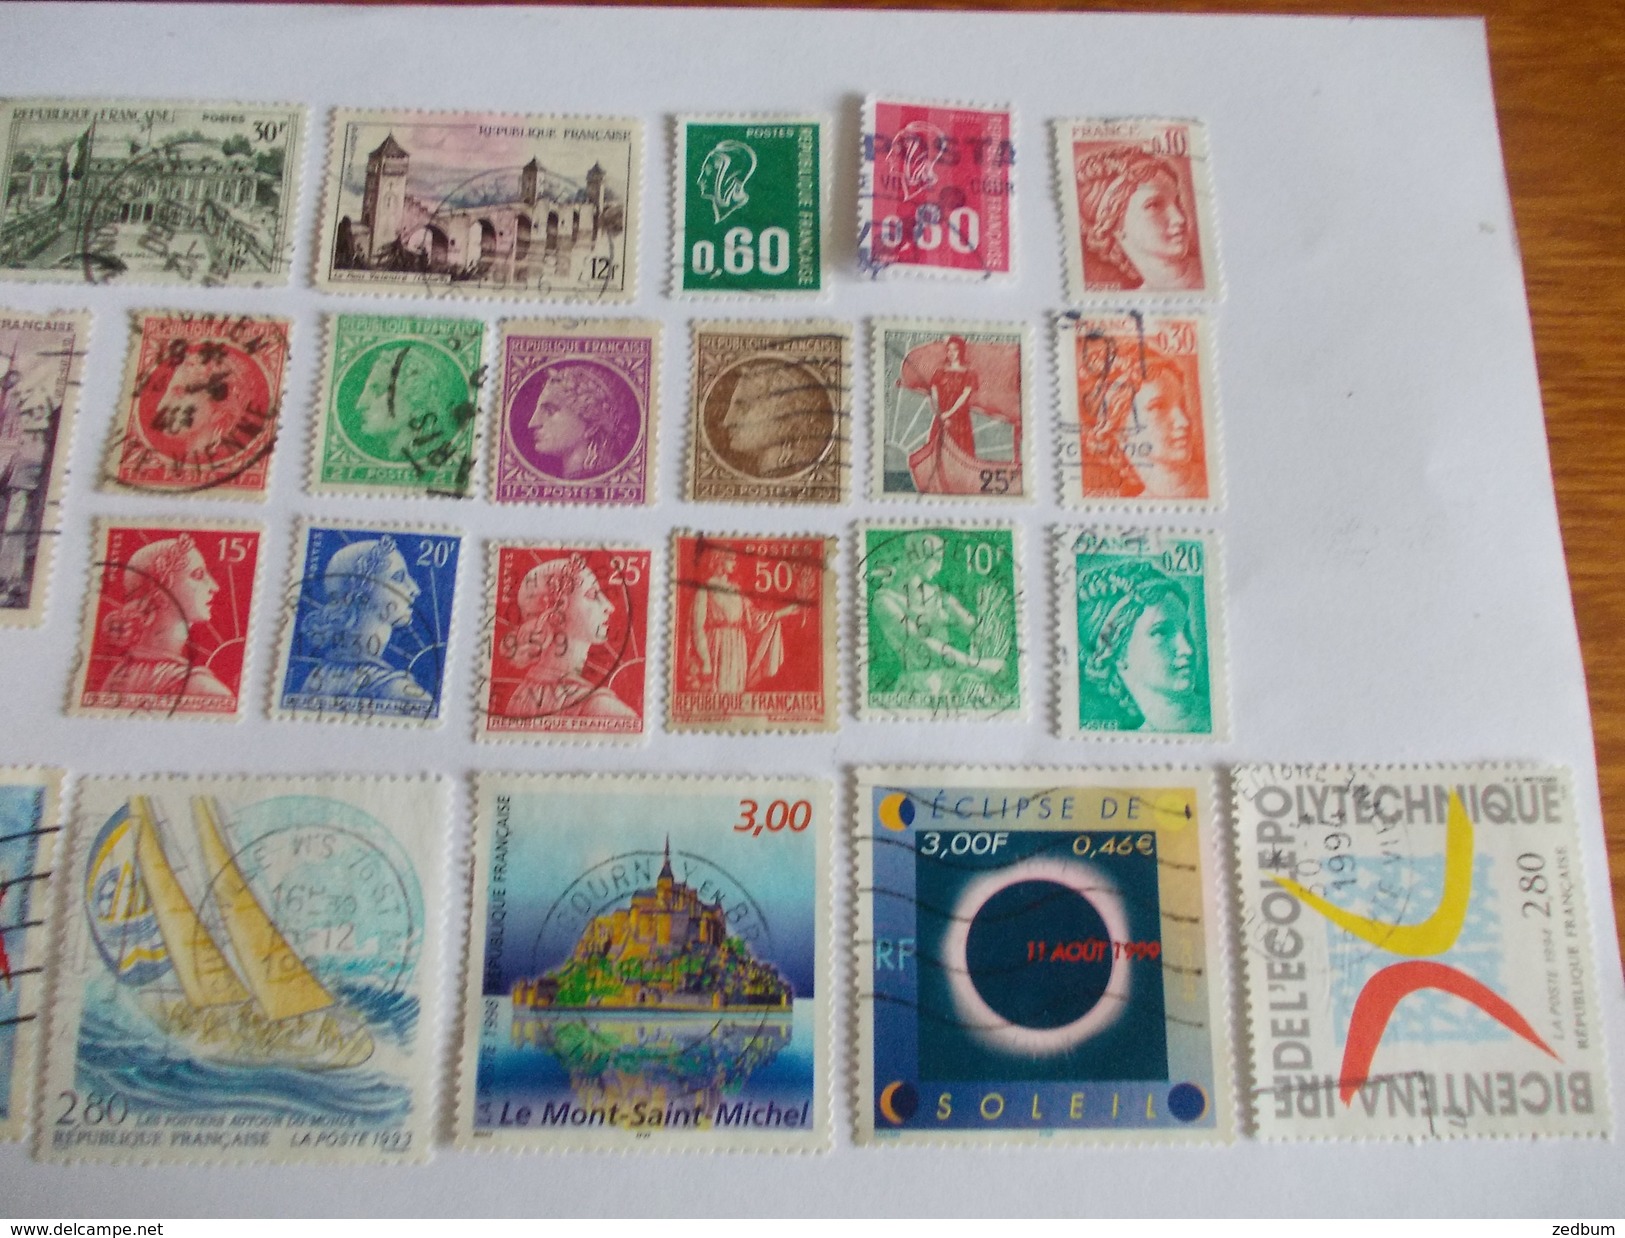 TIMBRE France Lot De 30 Timbres à Identifier N° 512 - Lots & Kiloware (mixtures) - Max. 999 Stamps